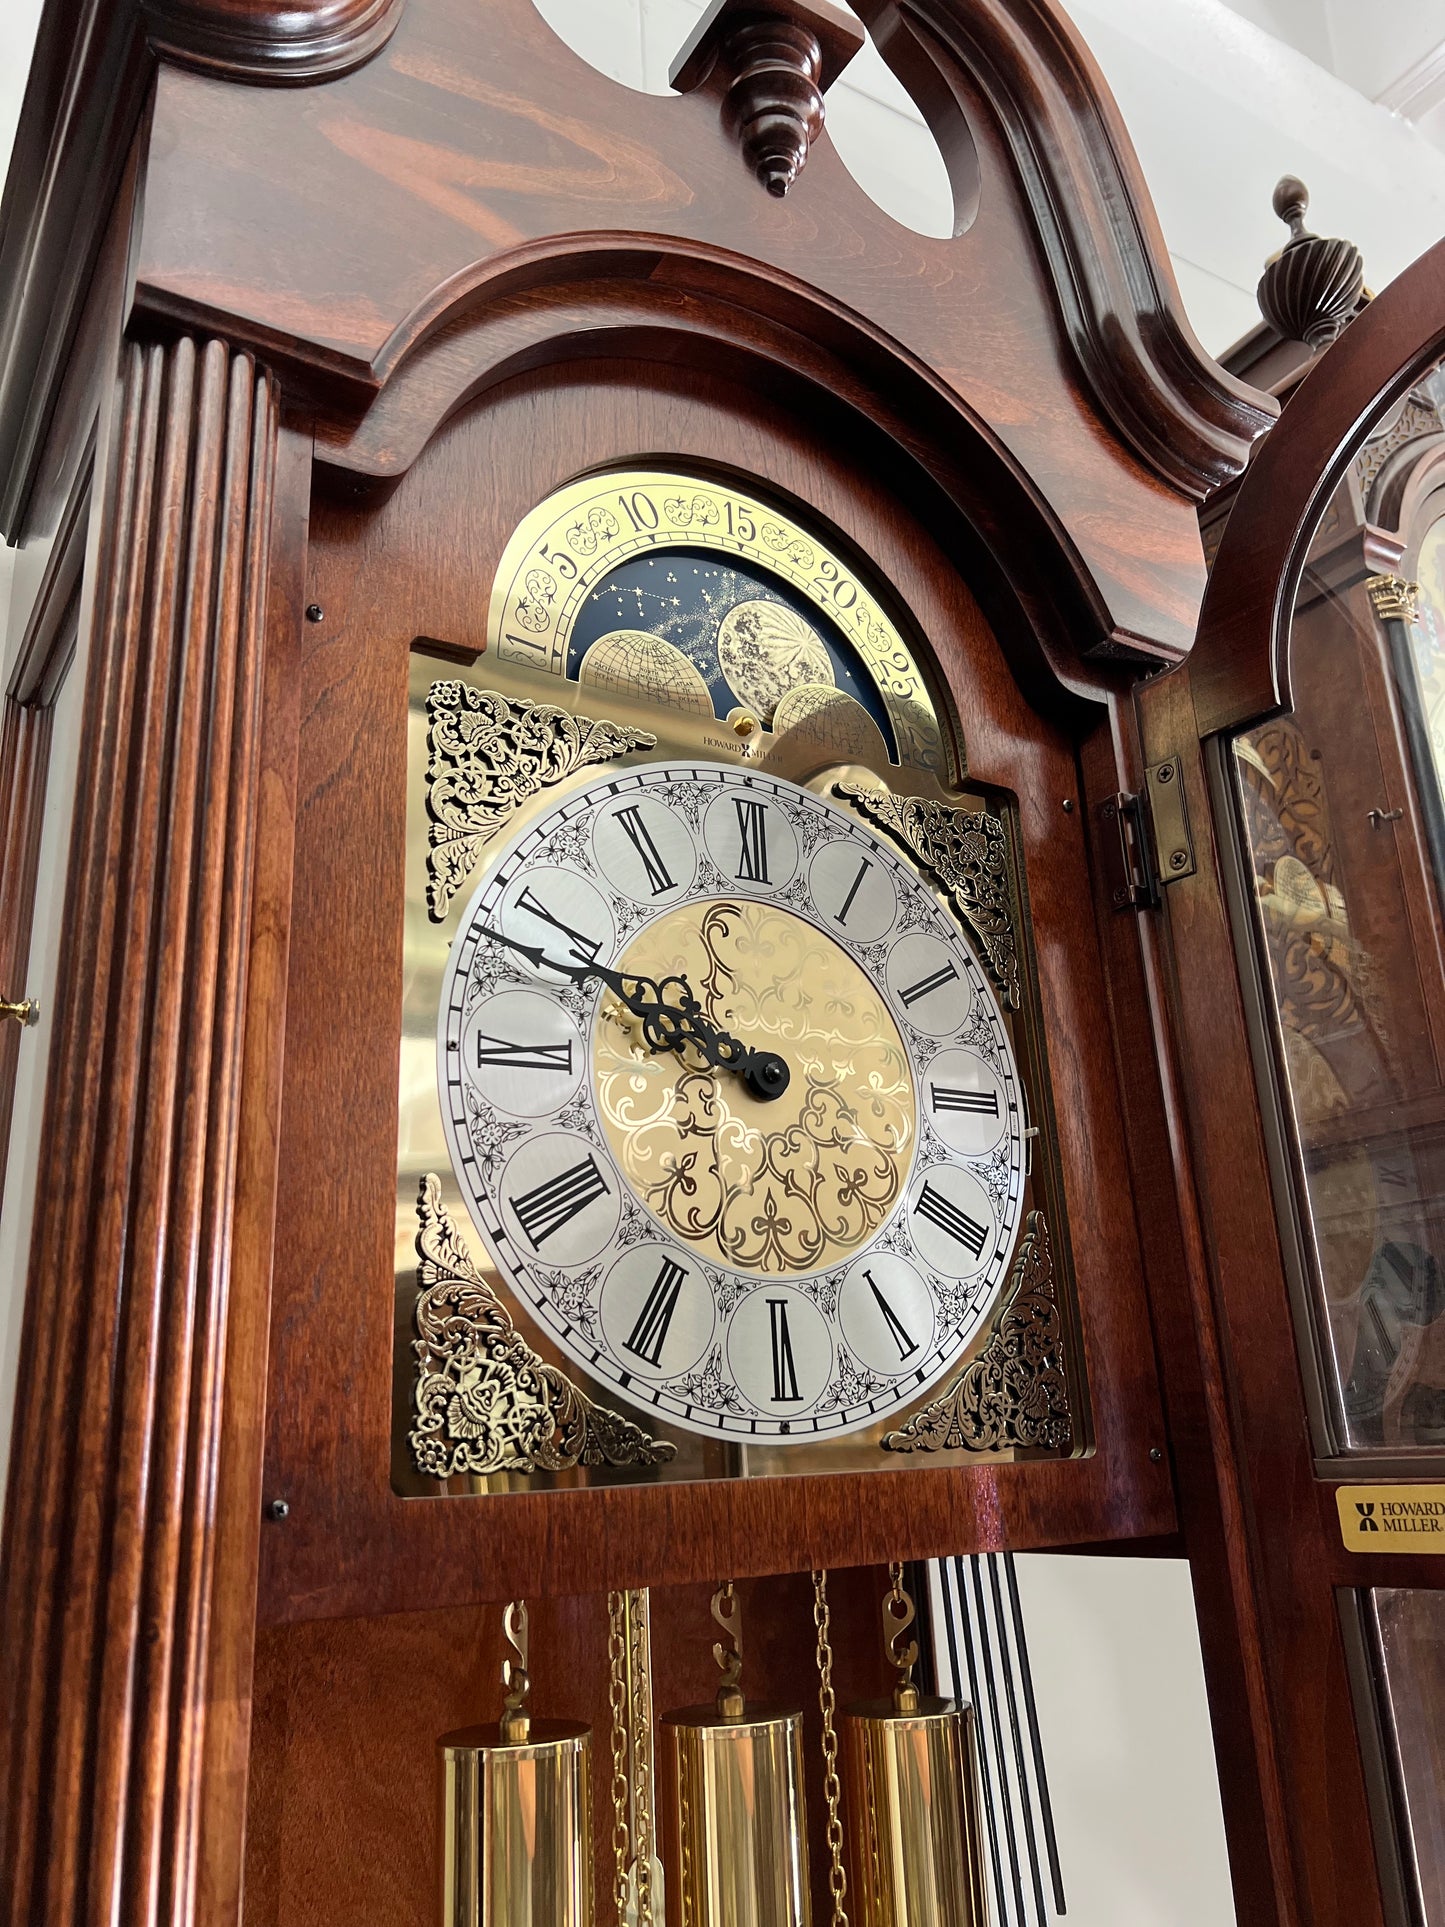 Howard Miller Grandfather Clock (610-710)